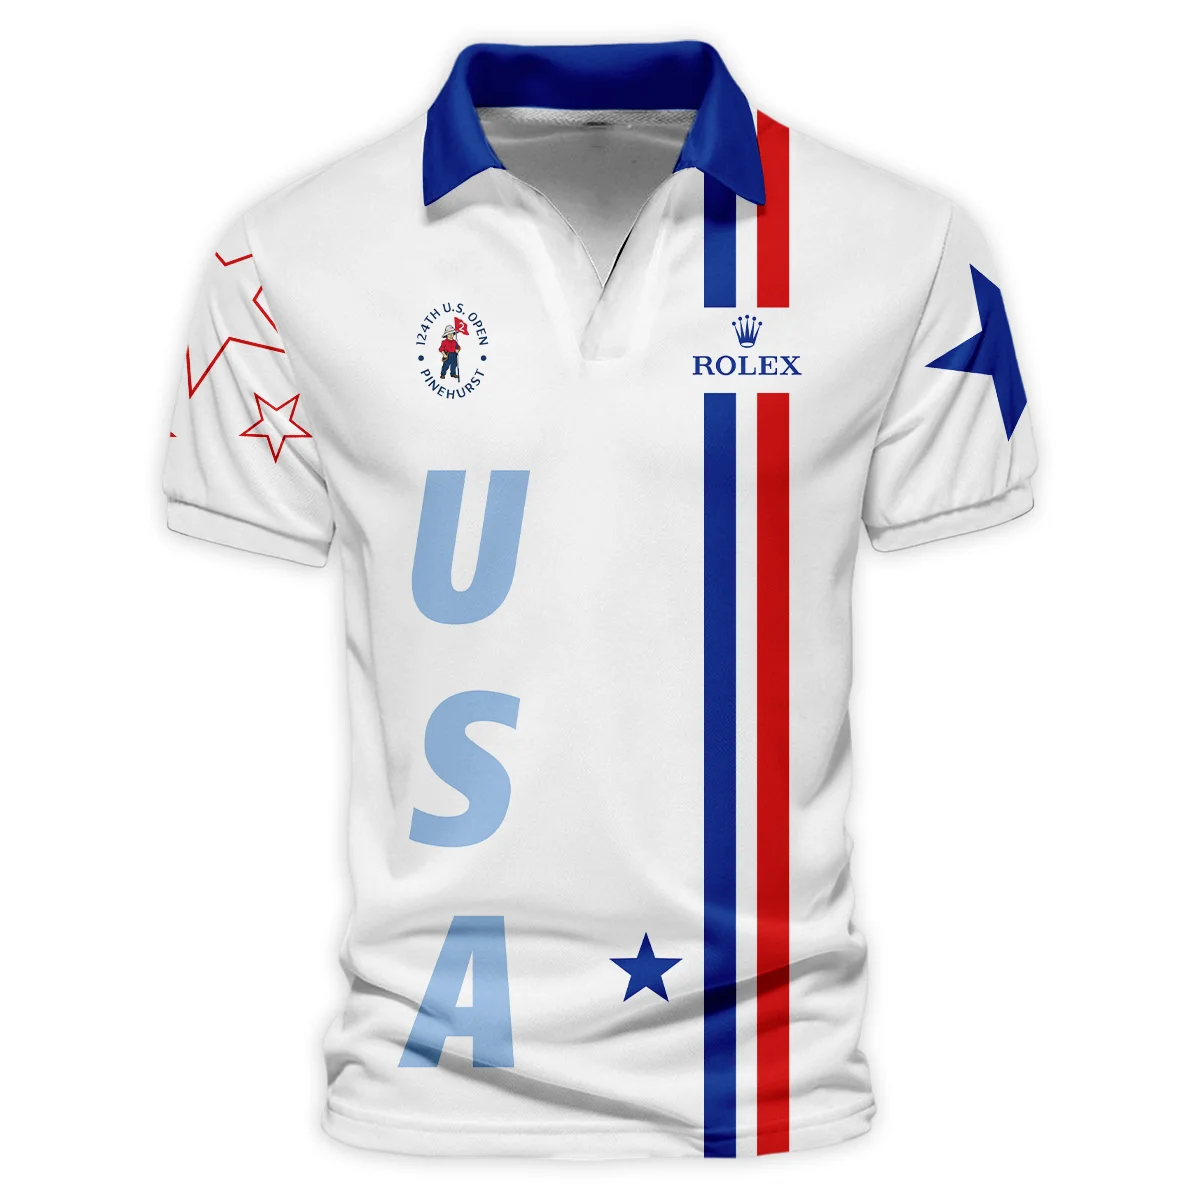 124th U.S. Open Pinehurst Rolex Blue Red Line White Vneck Polo Shirt Style Classic Polo Shirt For Men